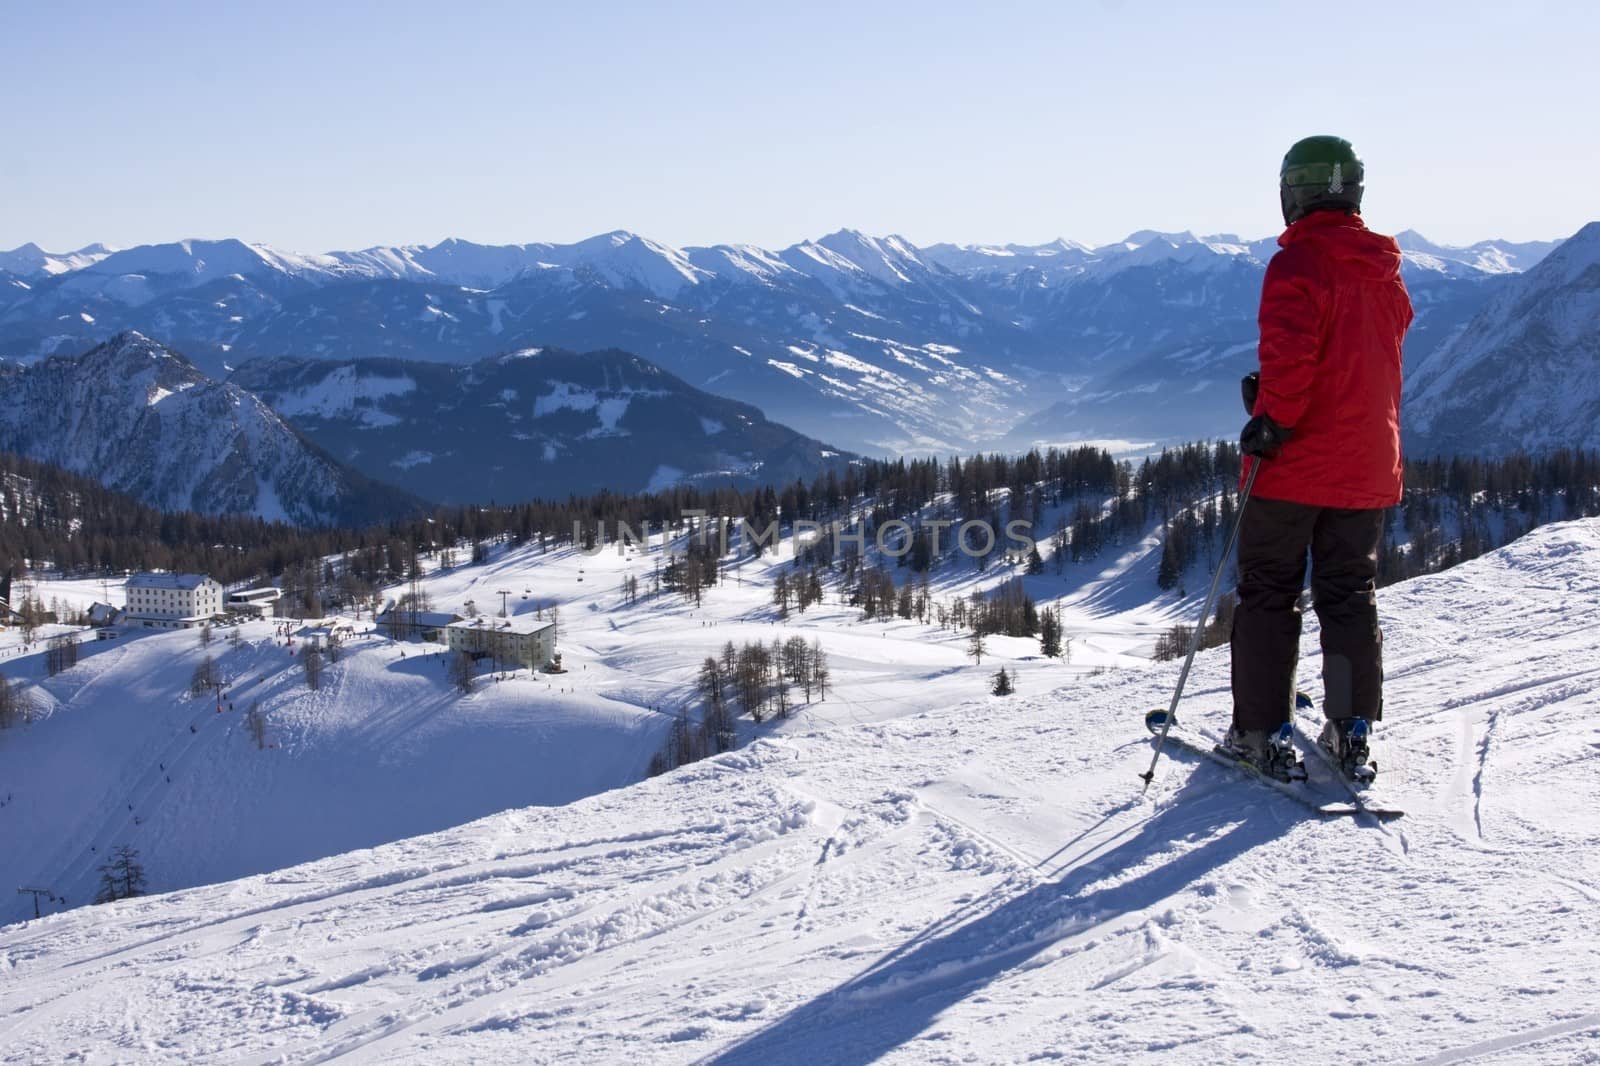 The skier watching beautiful montains panorama